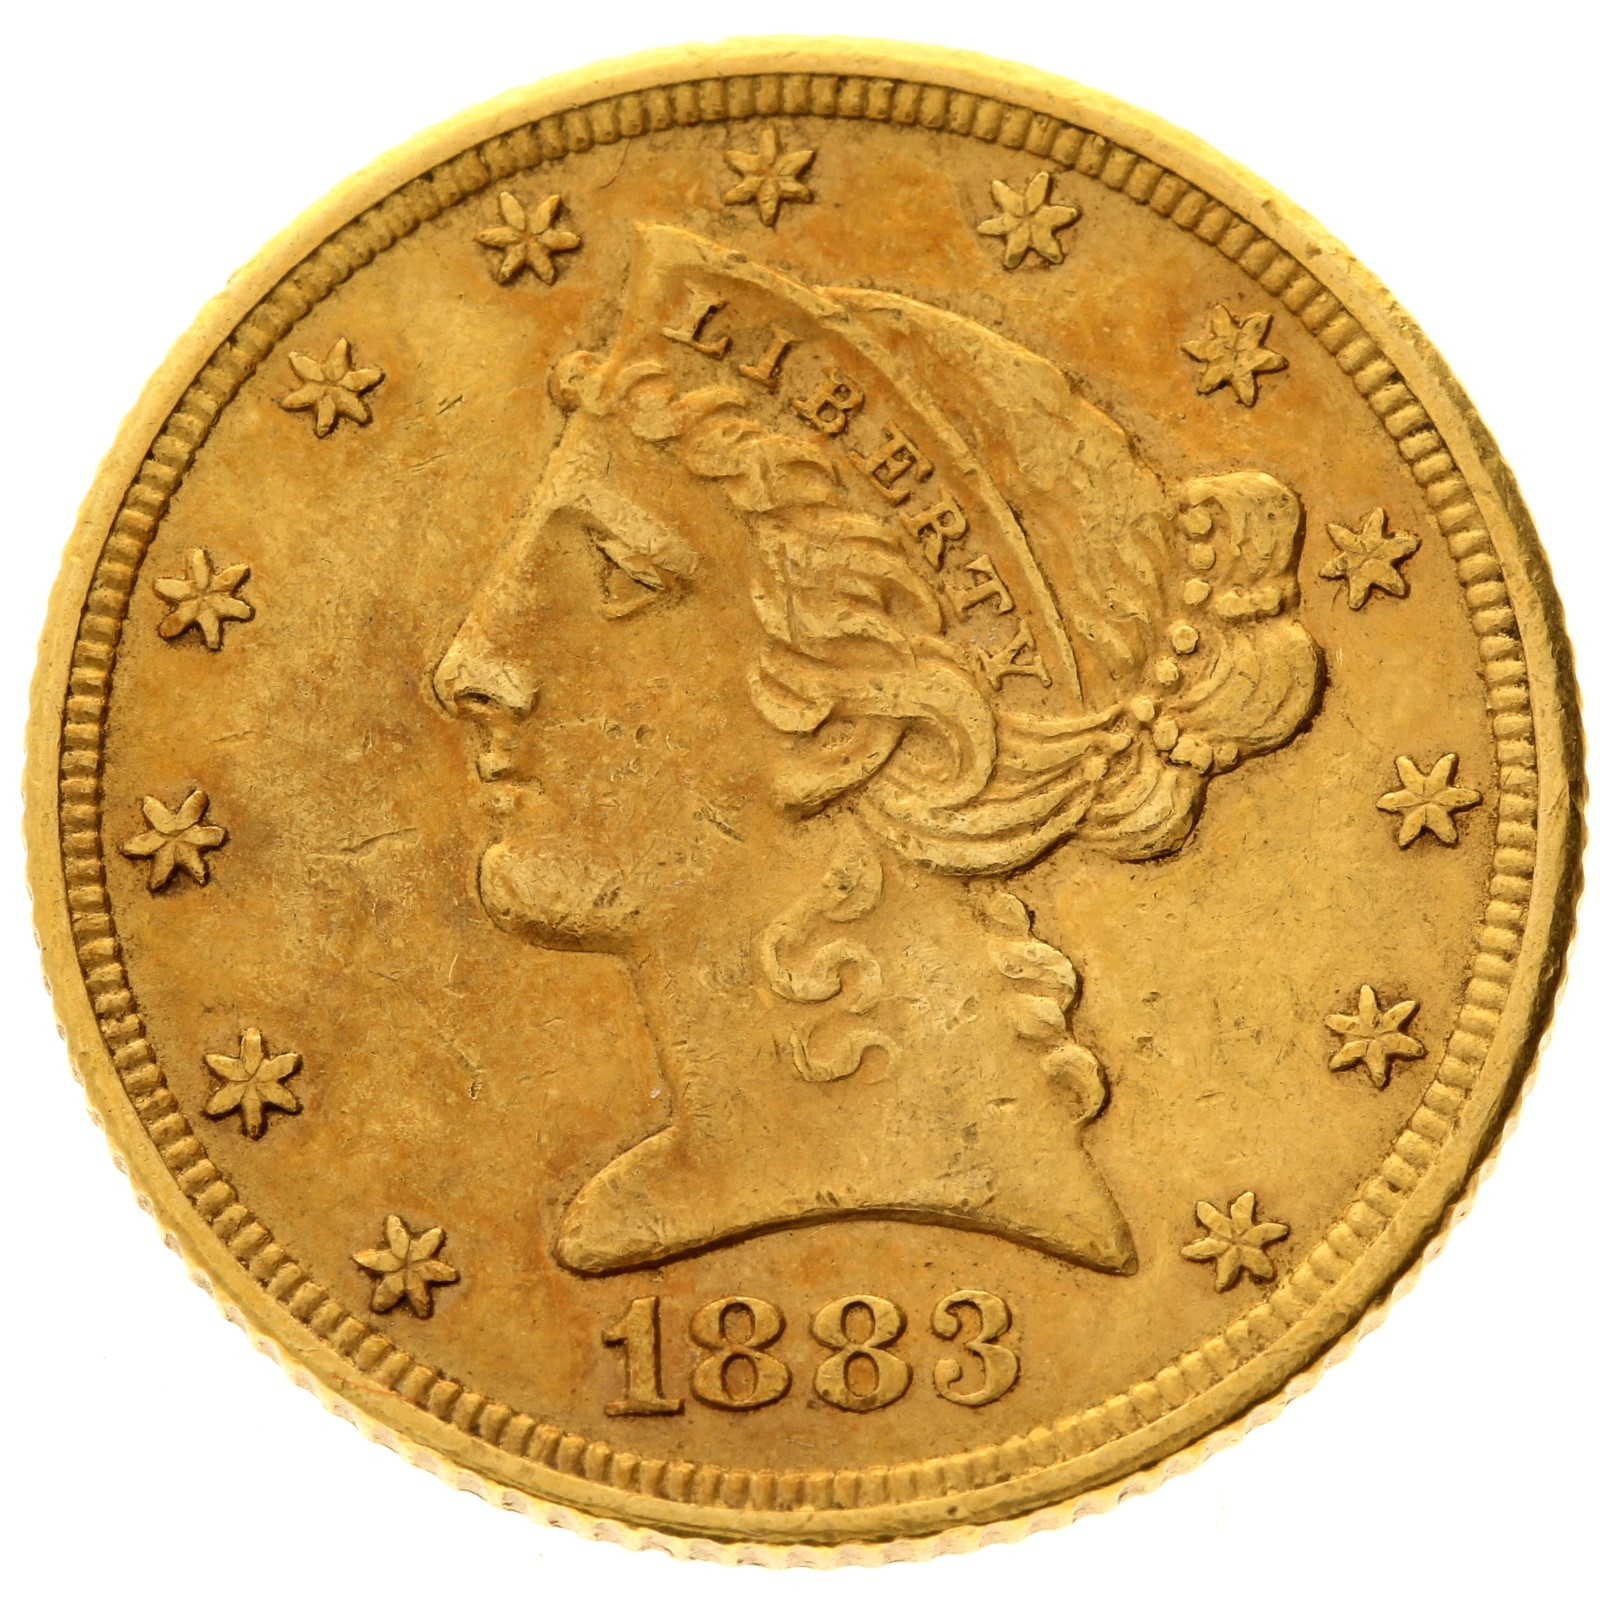 USA - 5 dollars - 1883 - Liberty / Coronet Head 